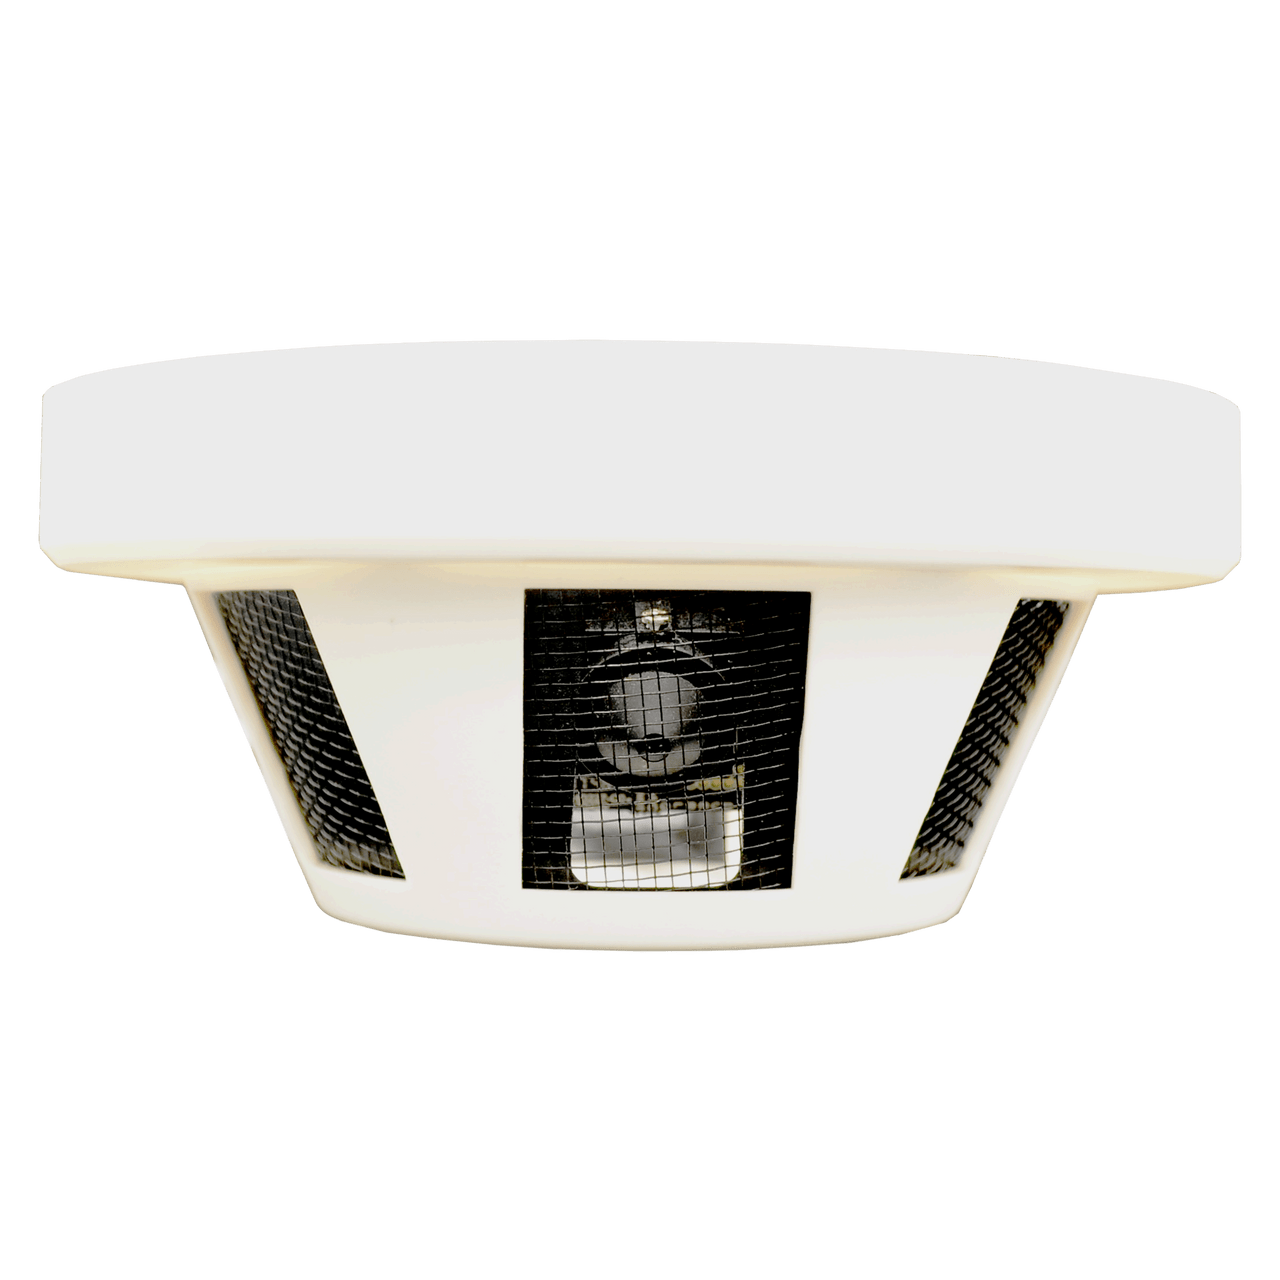 Speco Technologies VL562T 2MP HD-TVI Discreet Ceiling Mounted Camera, 3.7mm Lens, White Housing (VL562T)